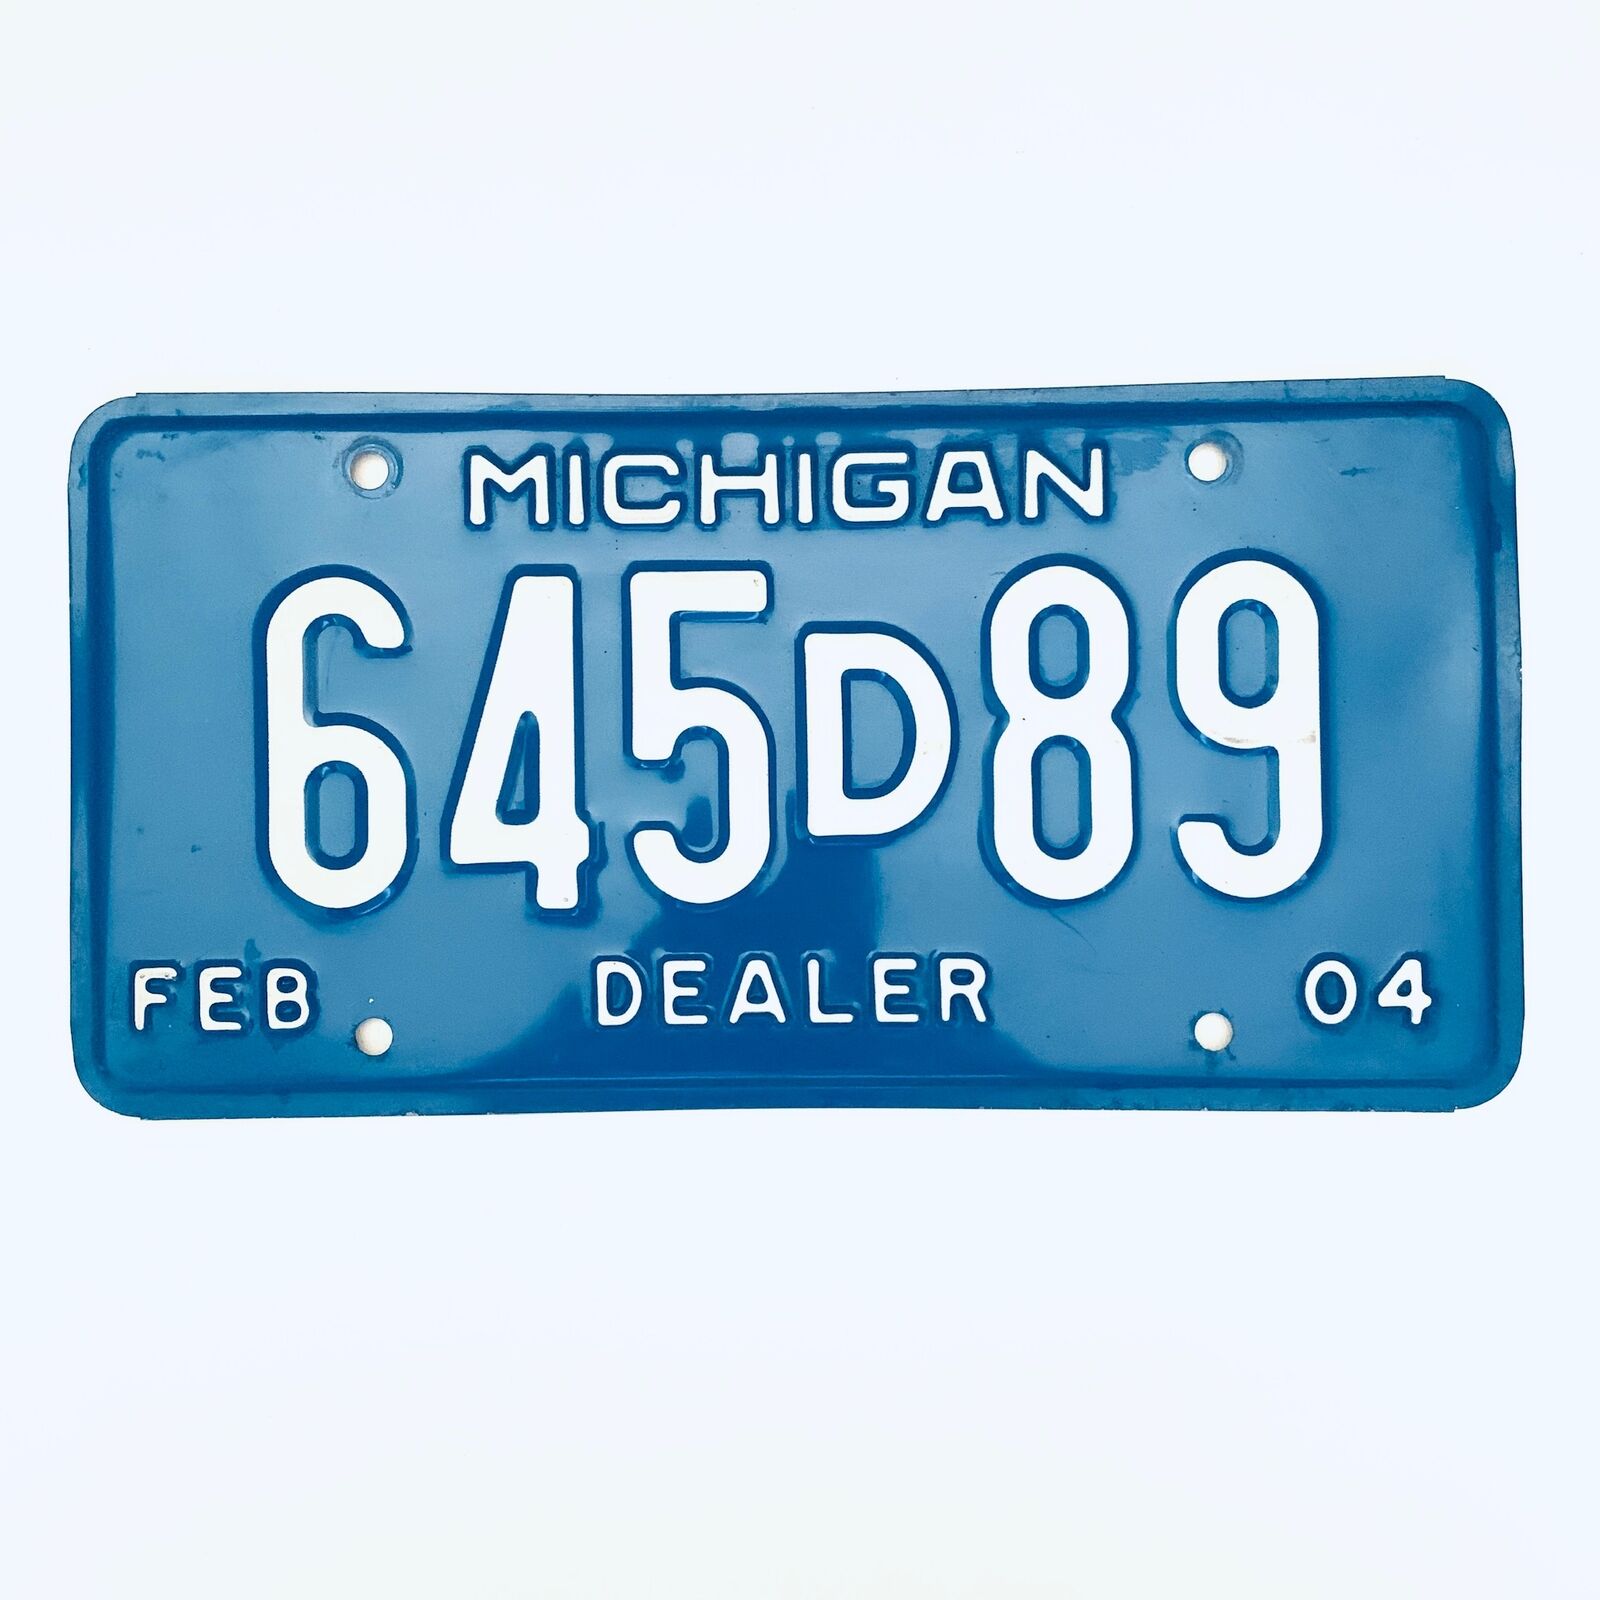 2004 United States Michigan Base Dealer License Plate 645d89